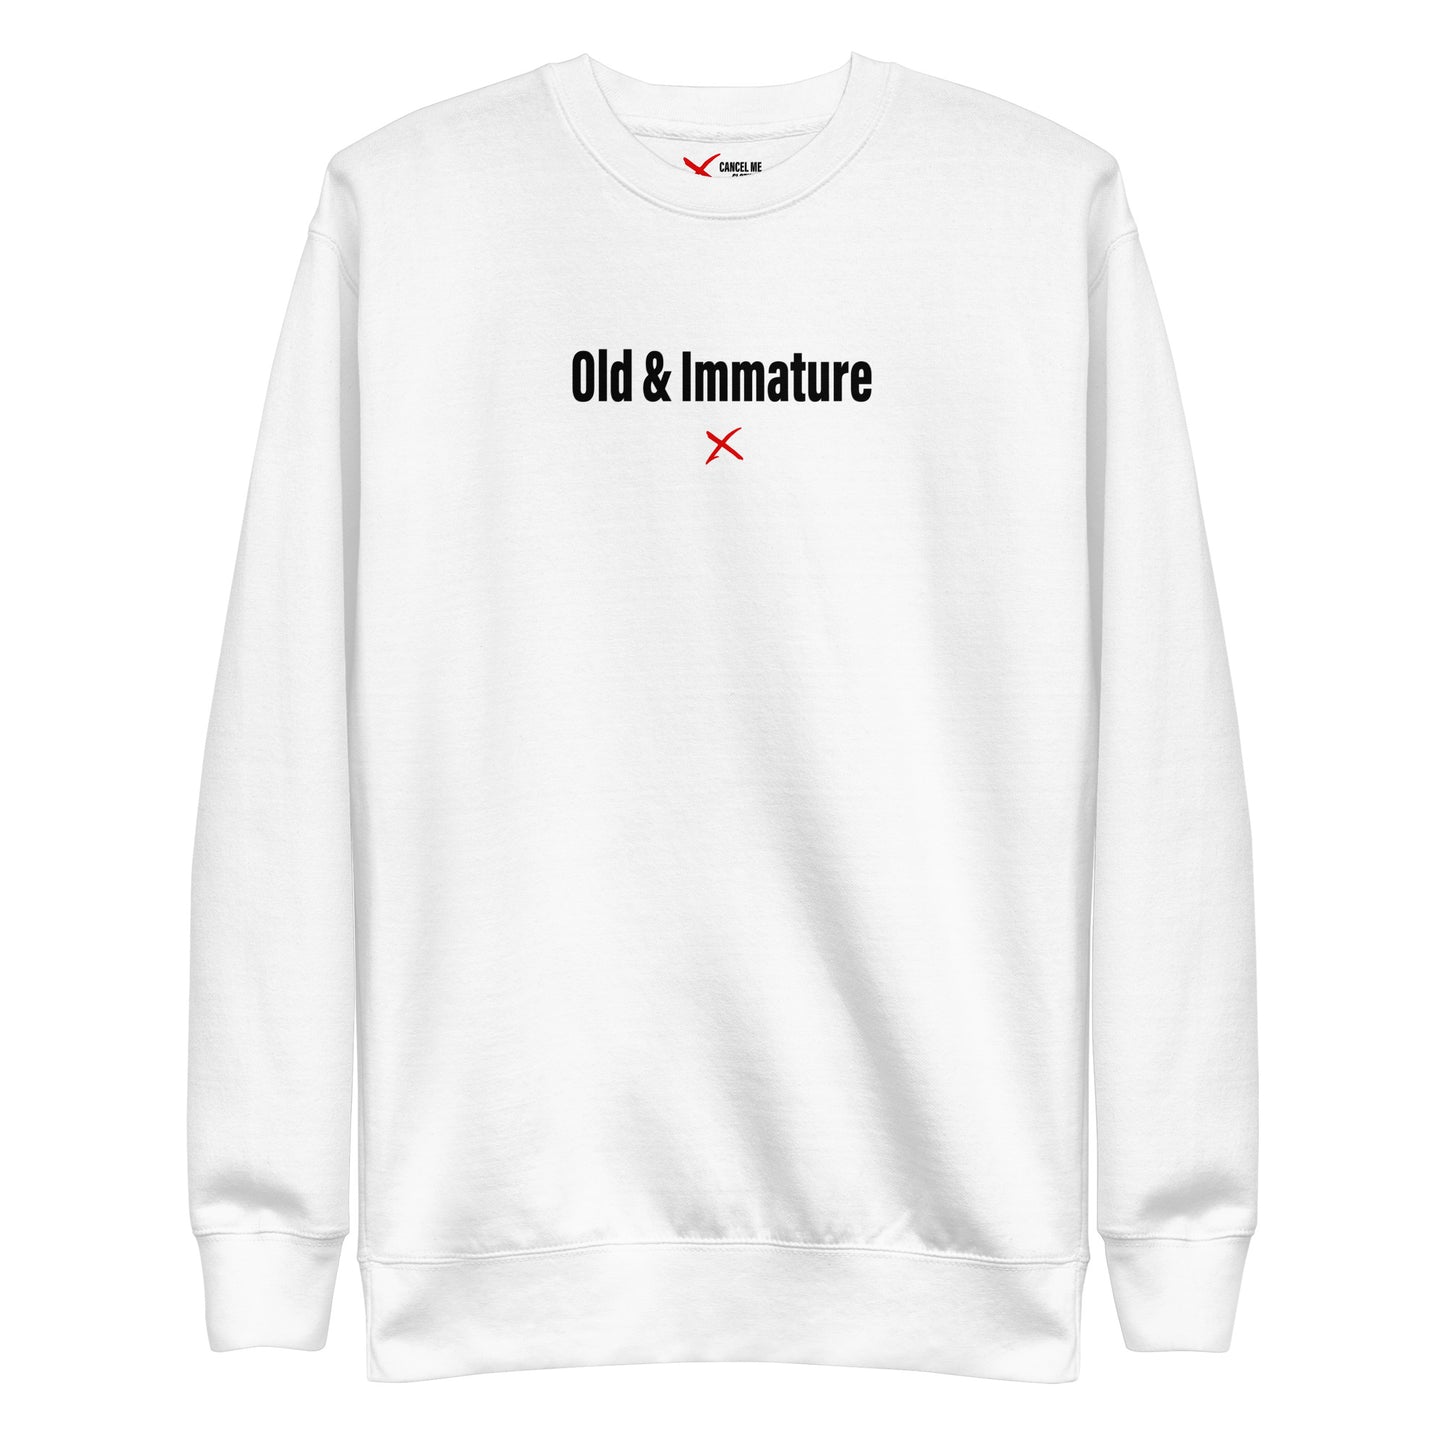 Old & Immature - Sweatshirt